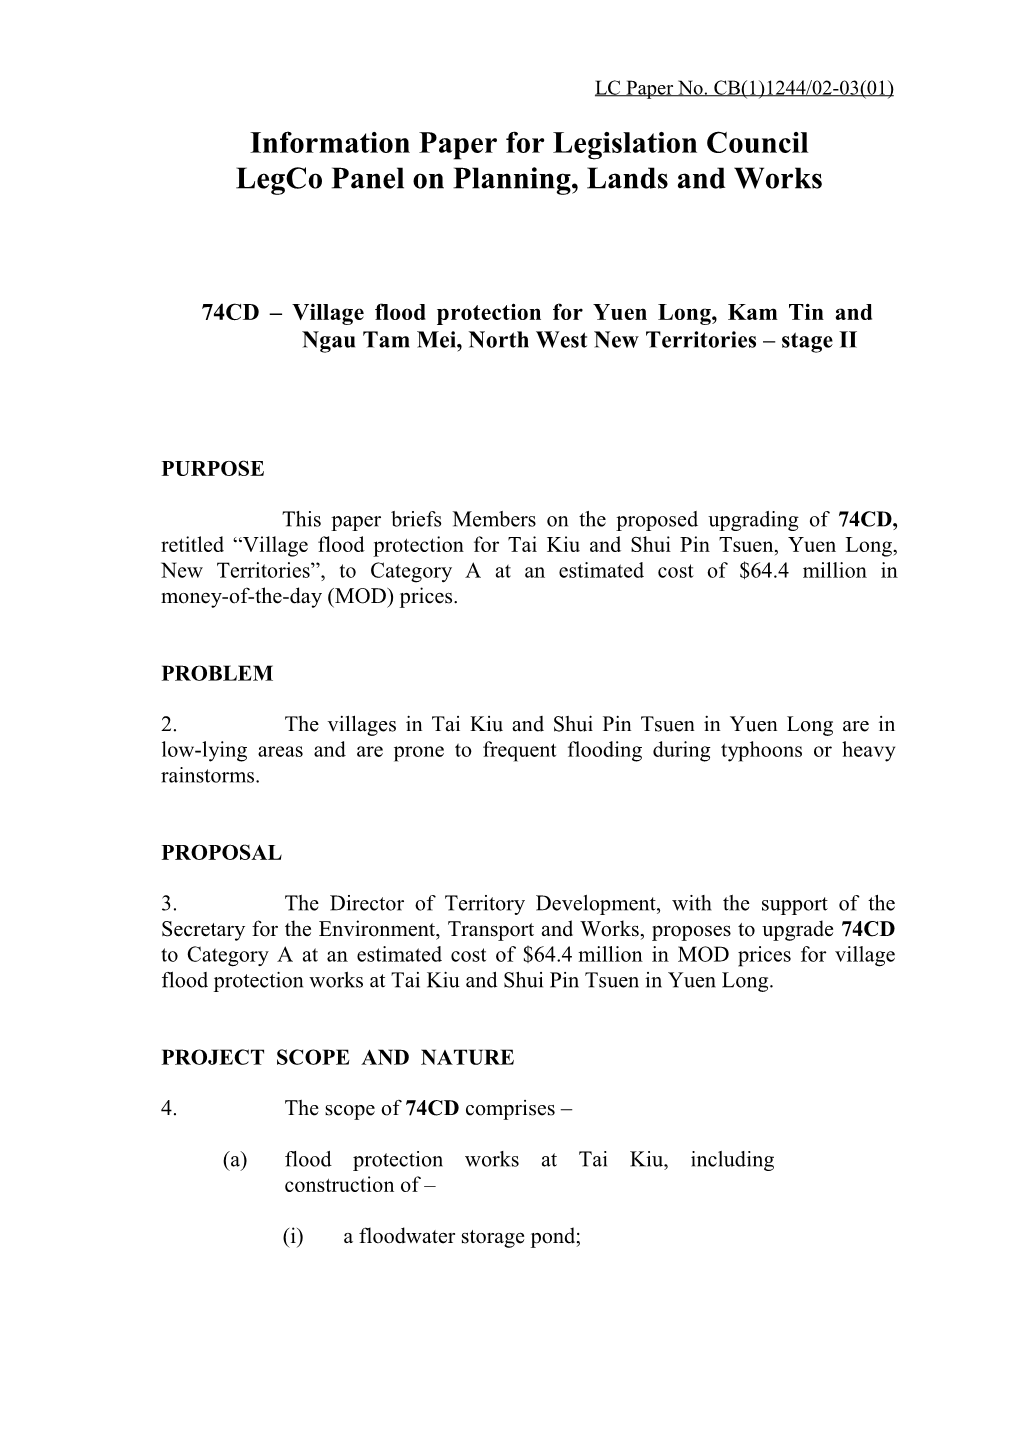 Information Paper on 74CD --- Village Flood Protection for Yuen Long, Kam